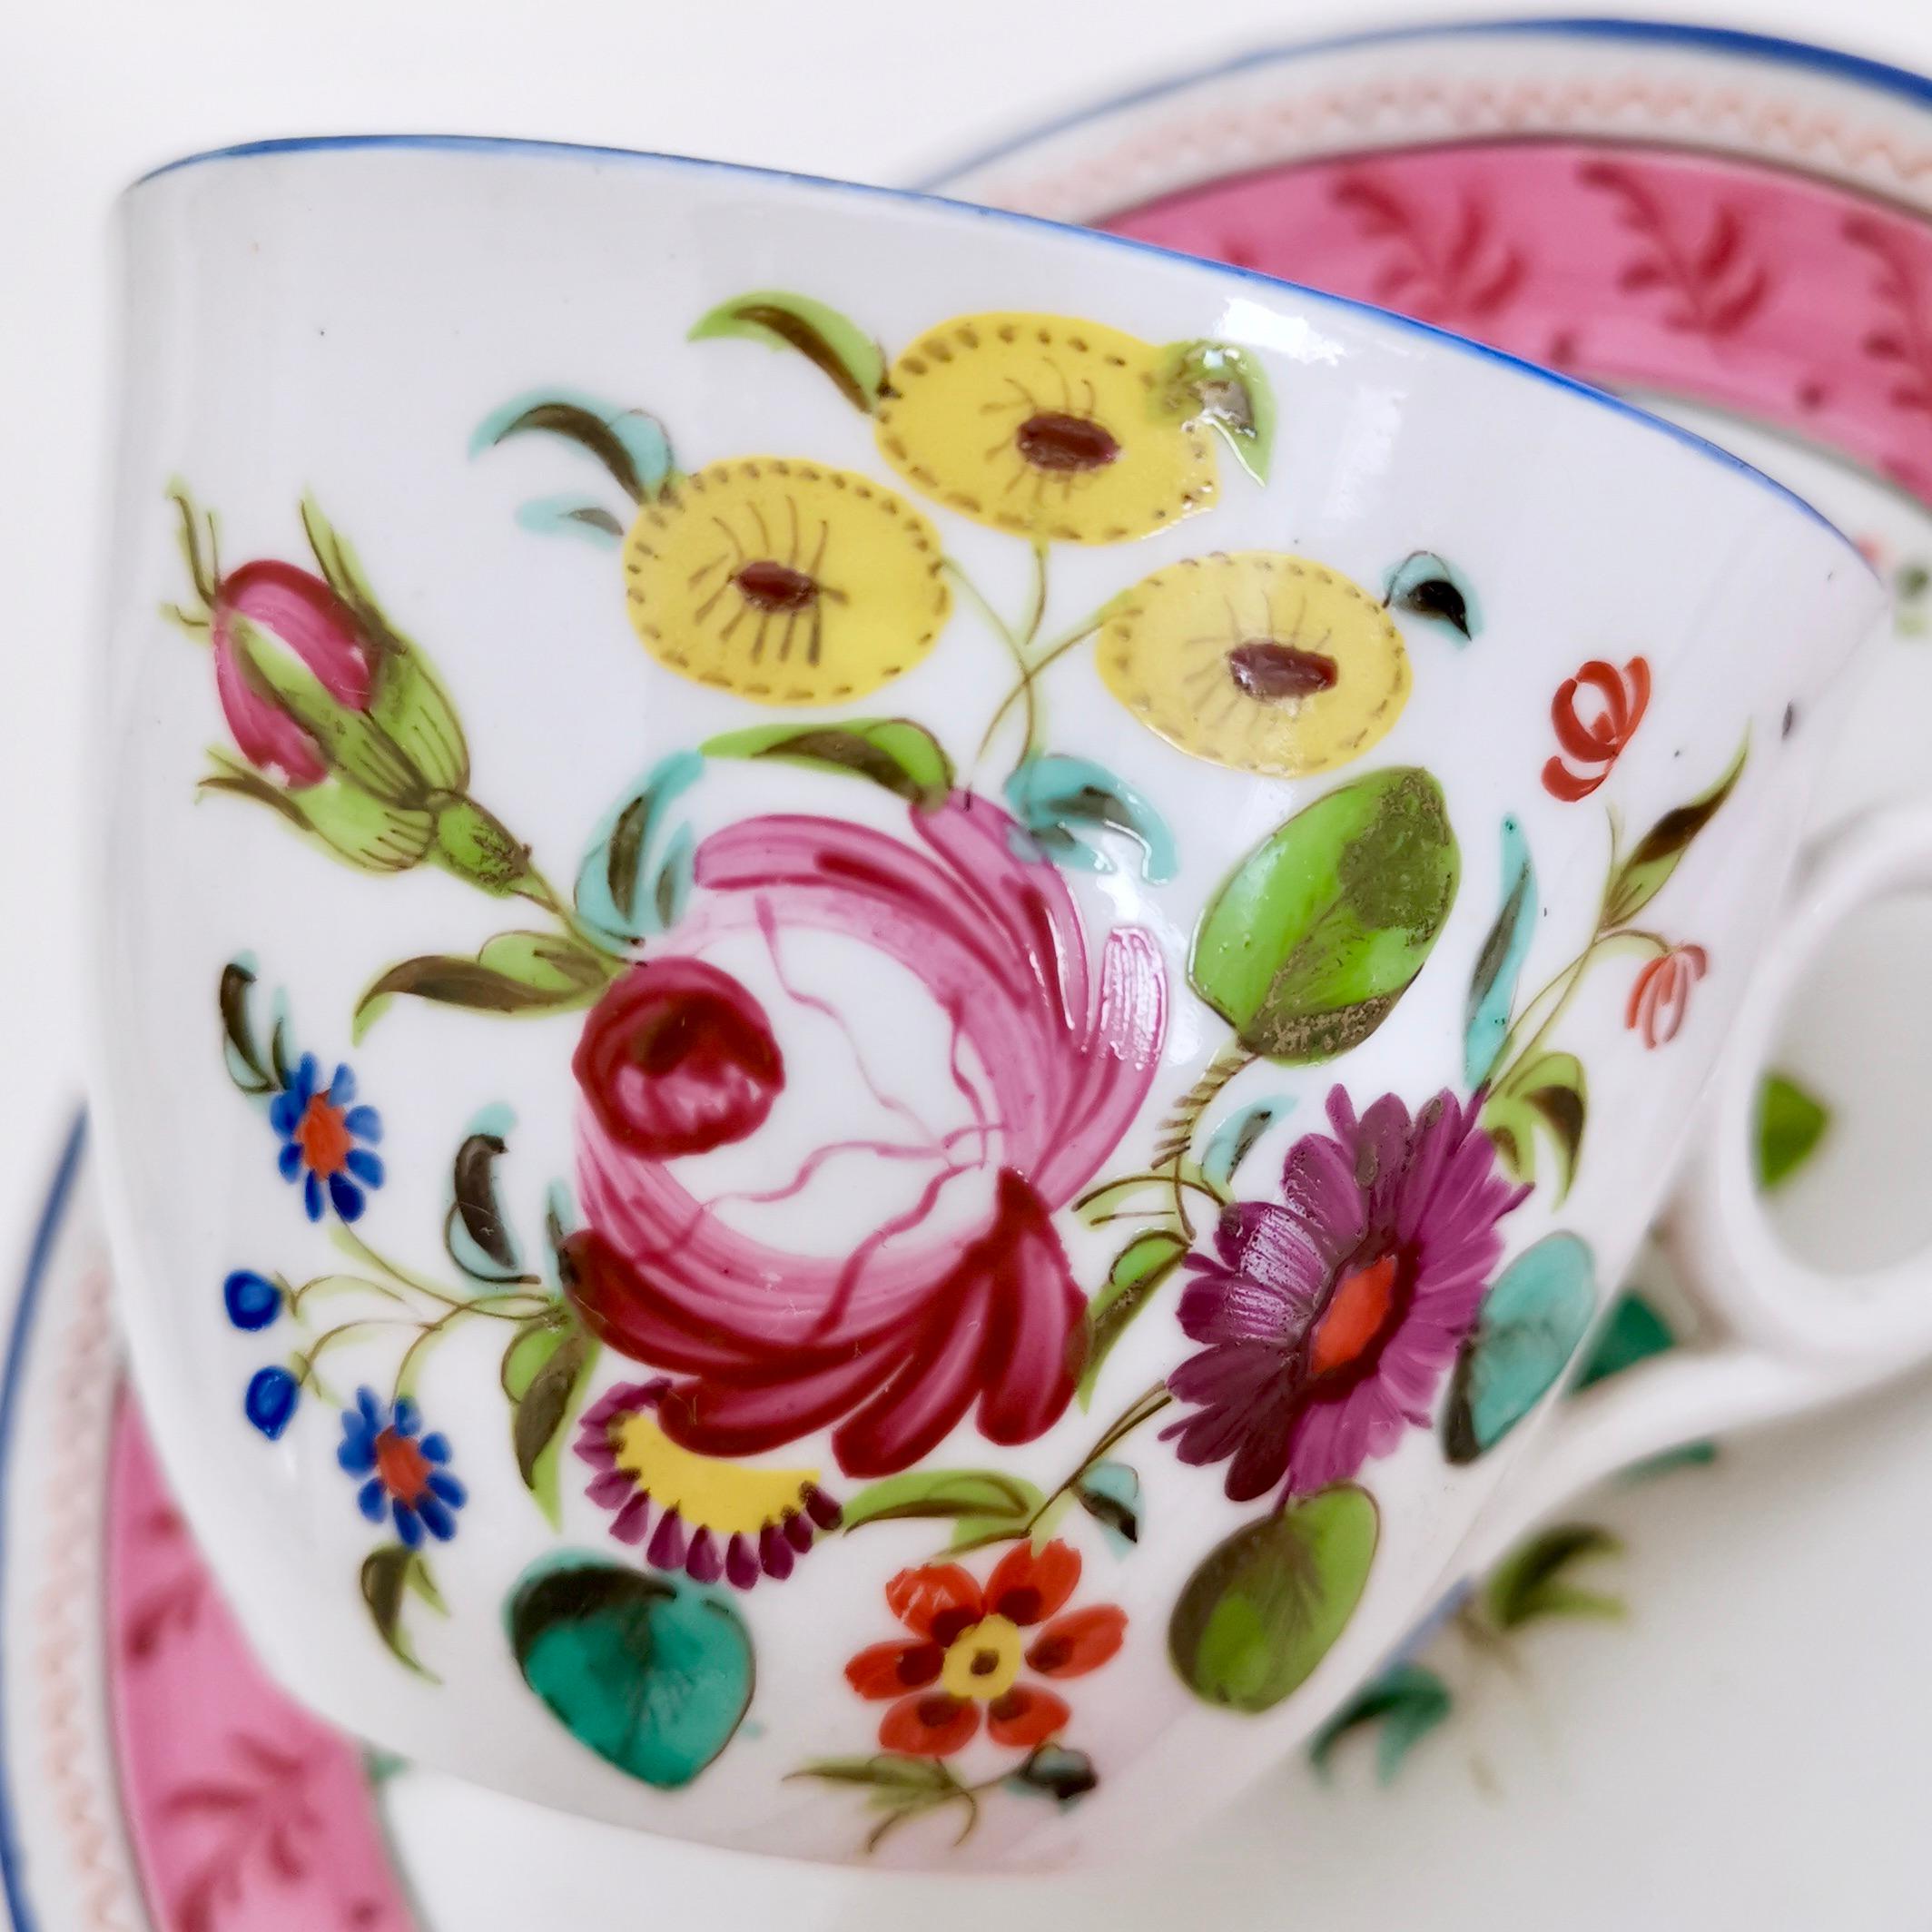 New Hall Porcelain Teacup, Hybrid Paste, Flowers Patt, 1180, circa 1815 3